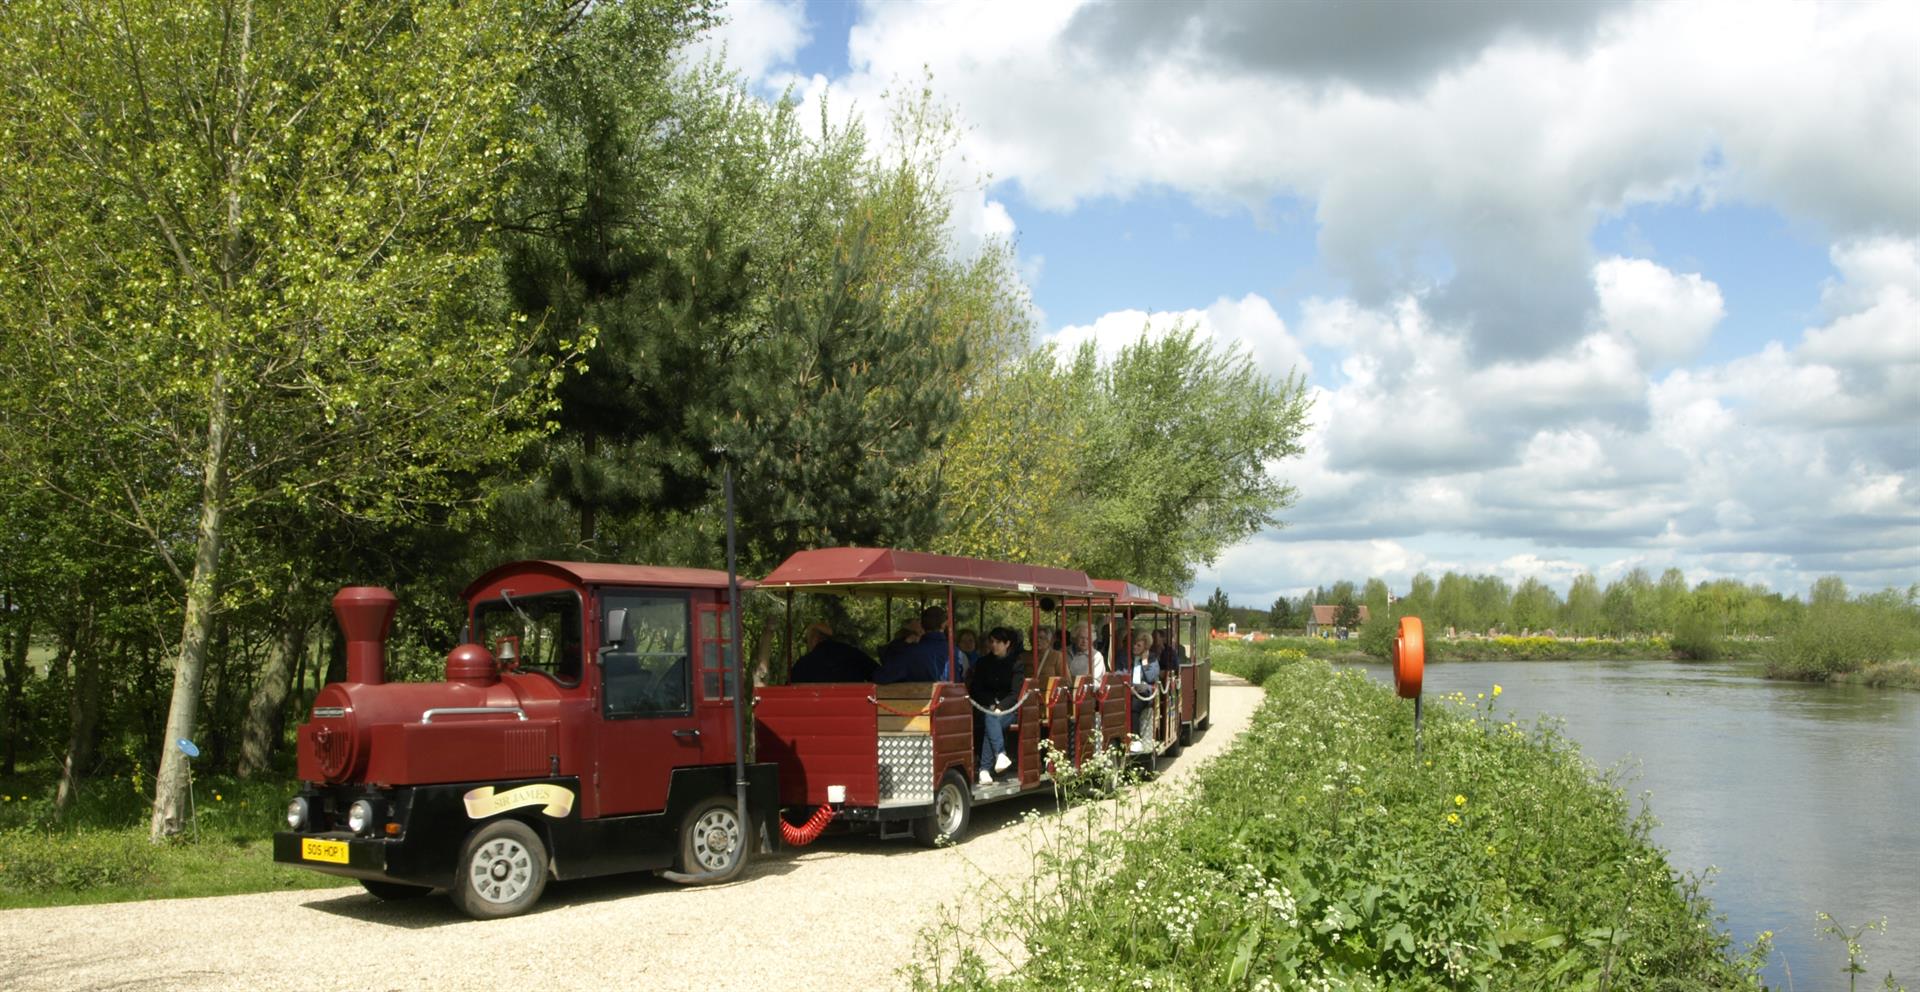 Land Train by the Tame - Credit National Memorial Arboretum